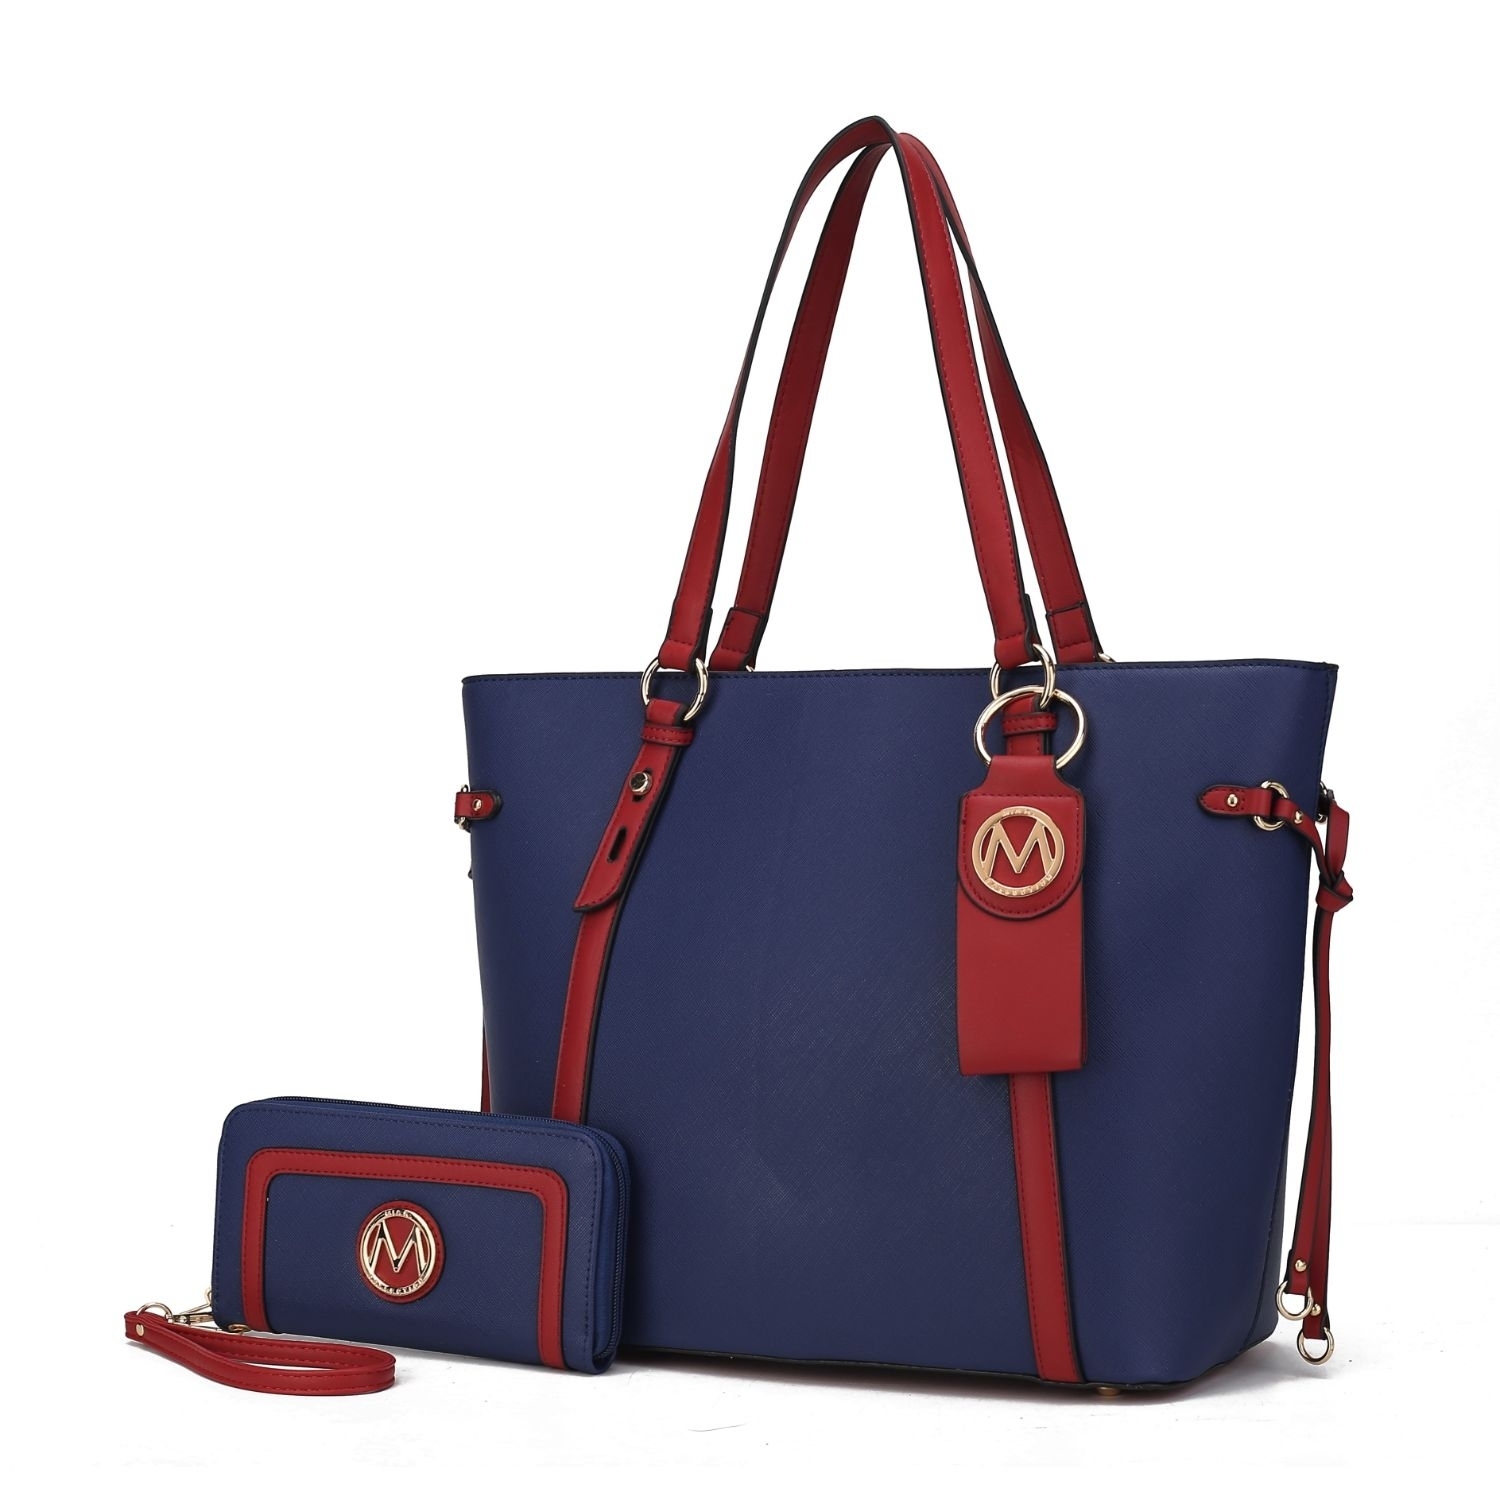 MKF Collection Koeia 3 Pcs Set Tote Handbag, Wallet And Keyring By Mia K. - Navy Red